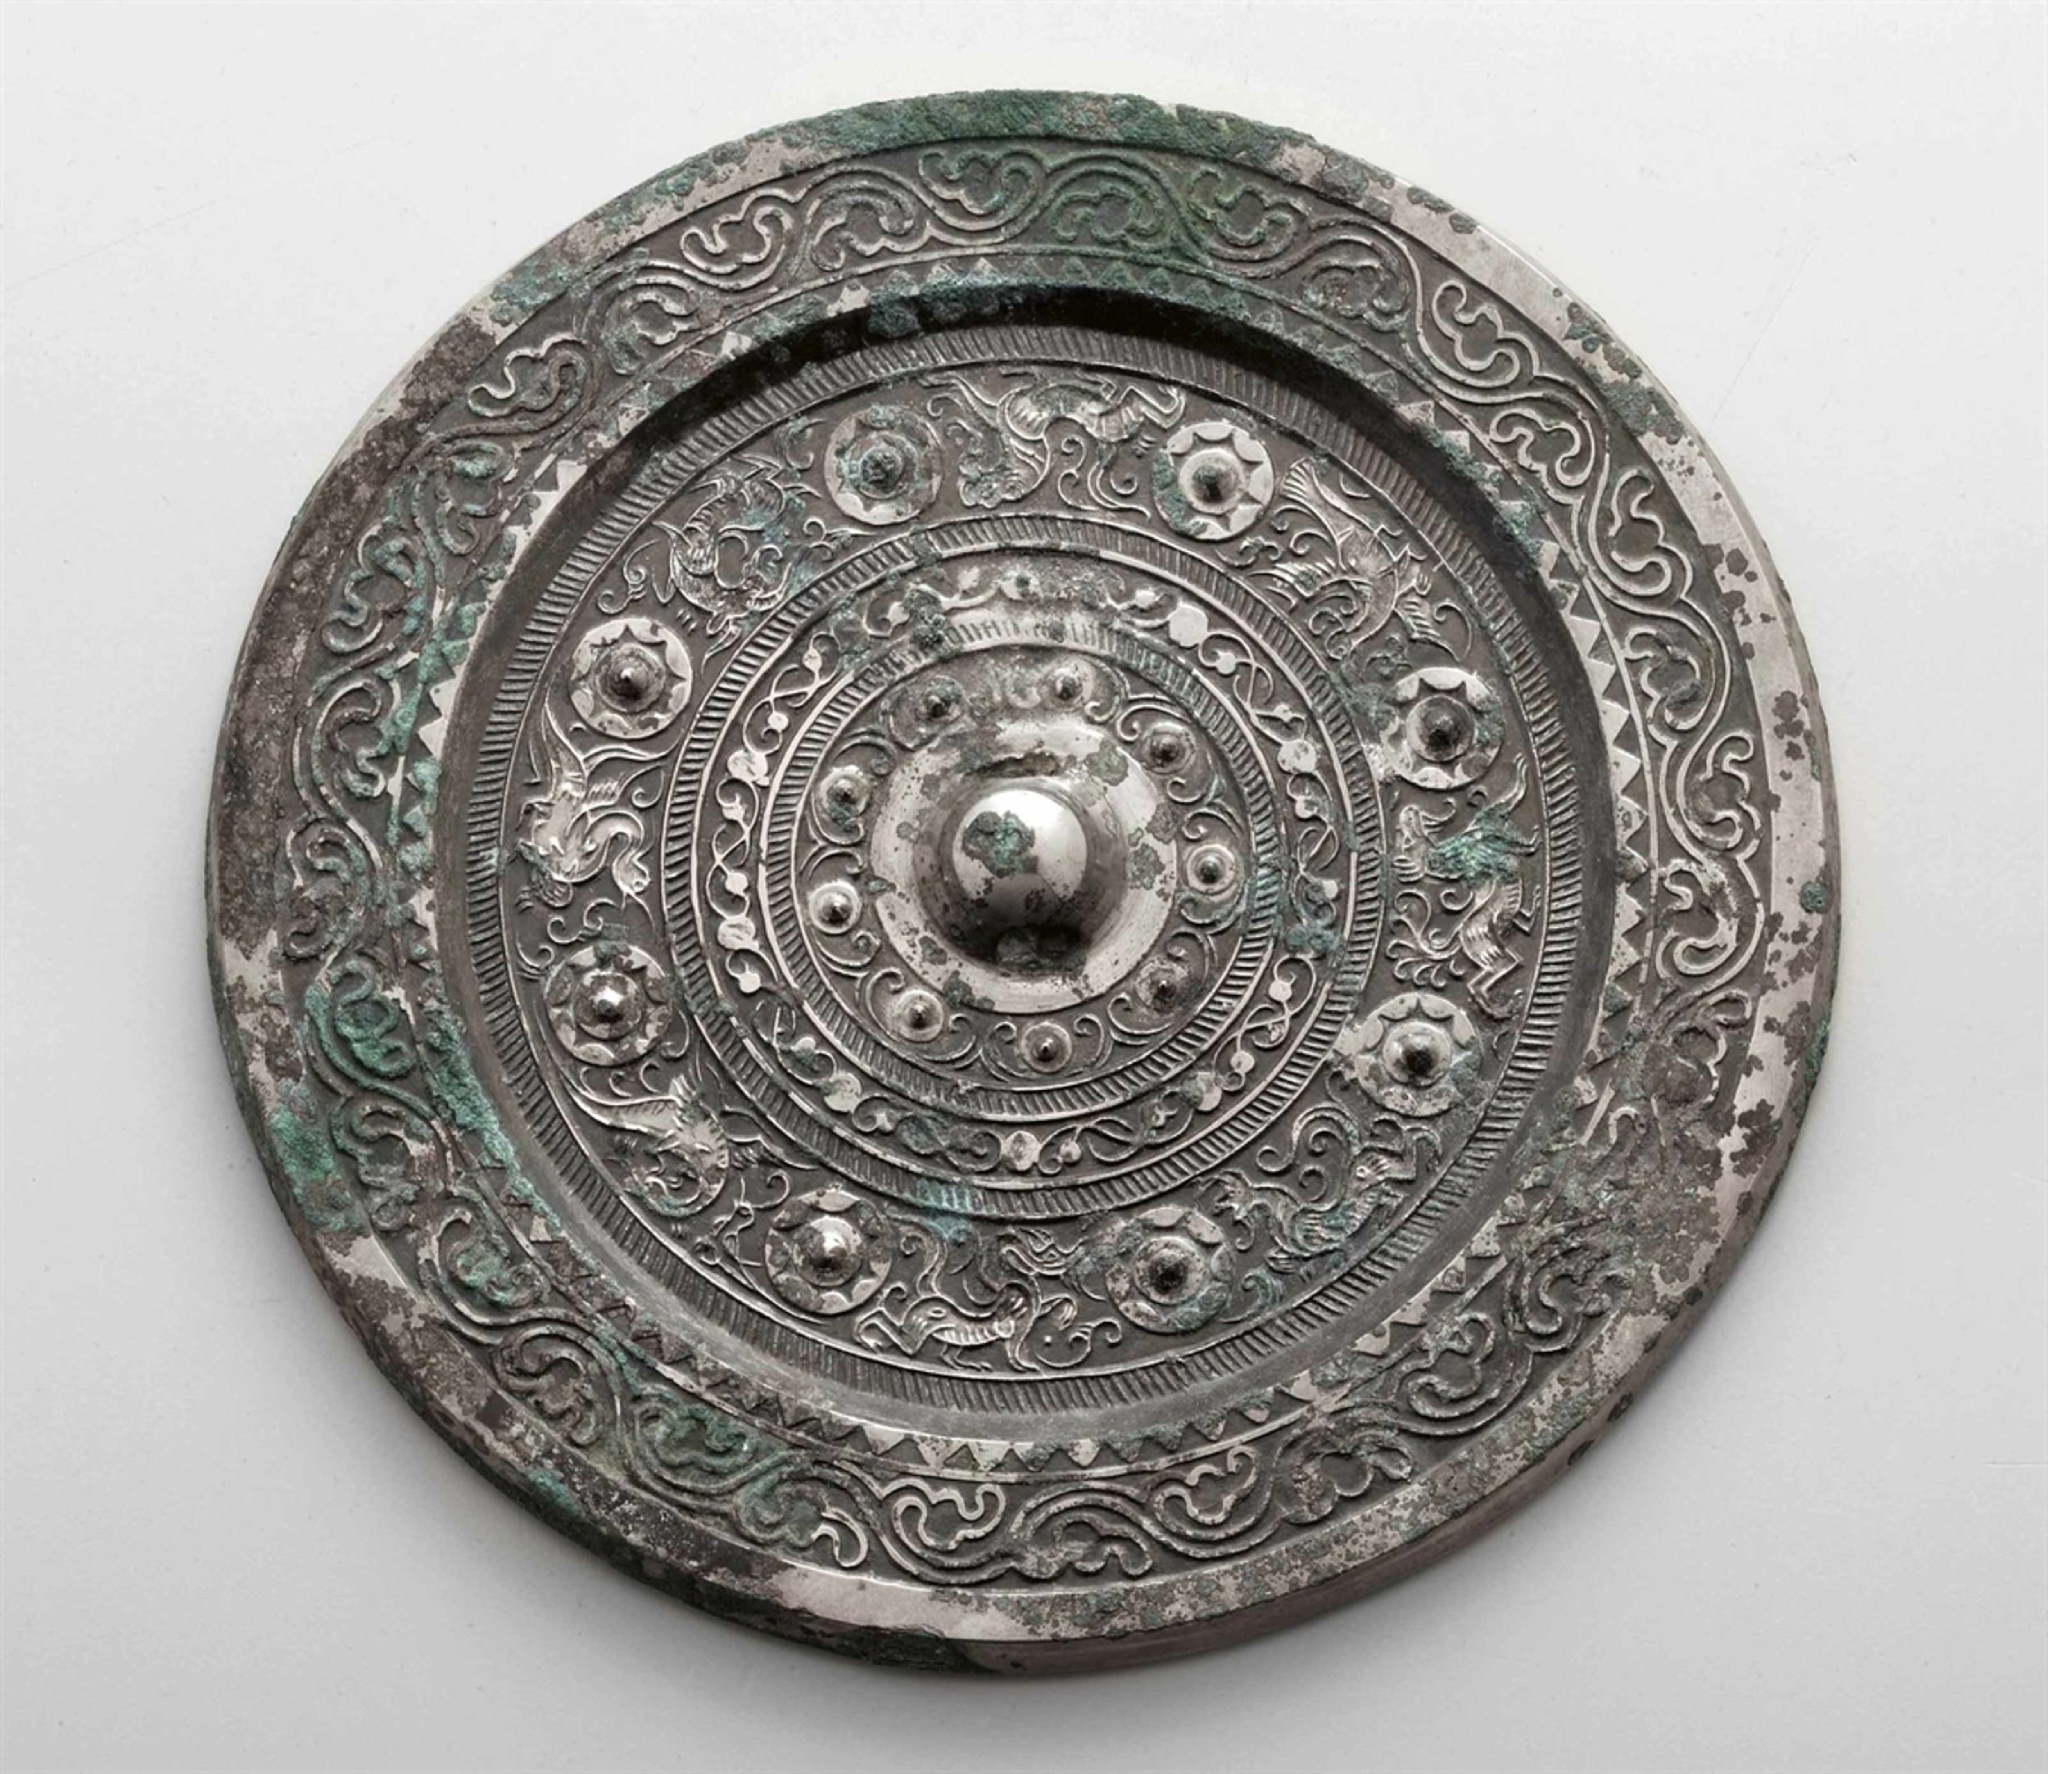 A silvery bronze circular mirror, Han Dynasty (206 BC-AD 220)